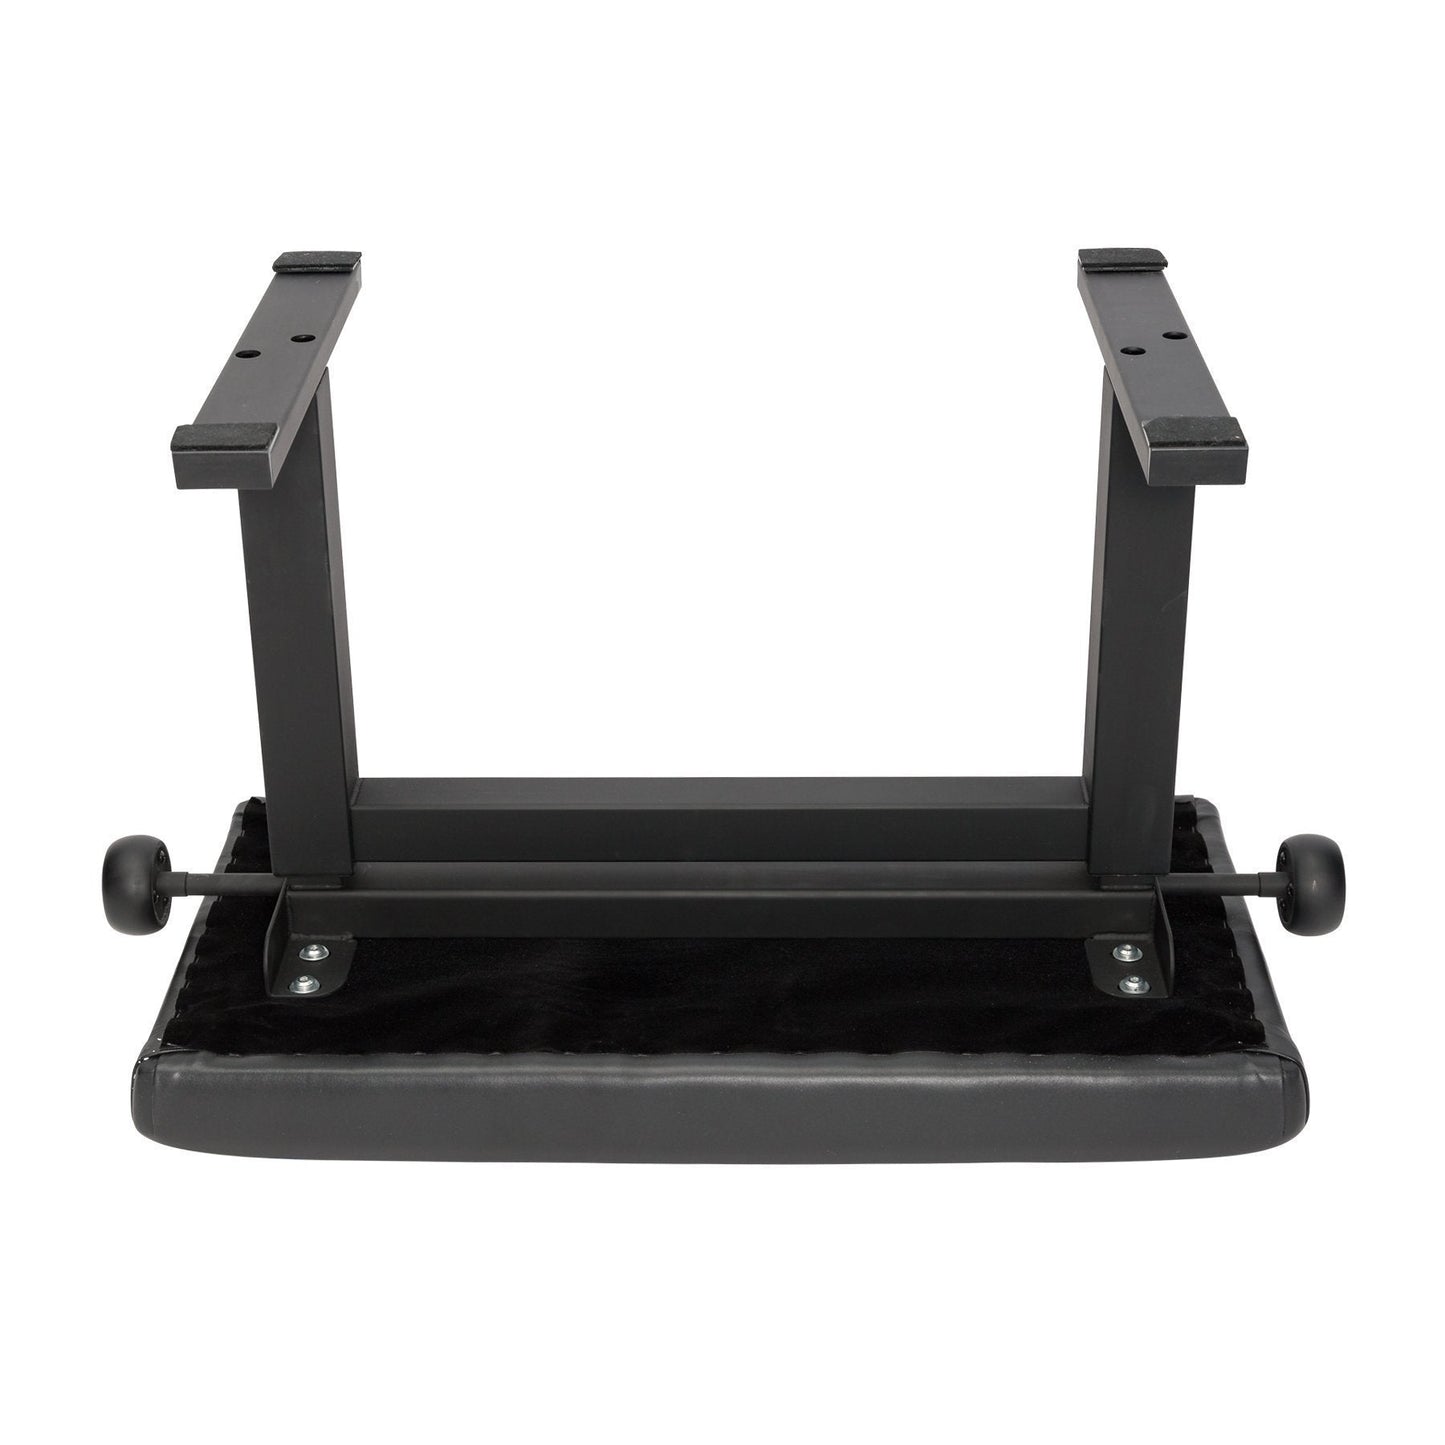 Crown Hydraulic Height Adjustable Piano Stool (Black)